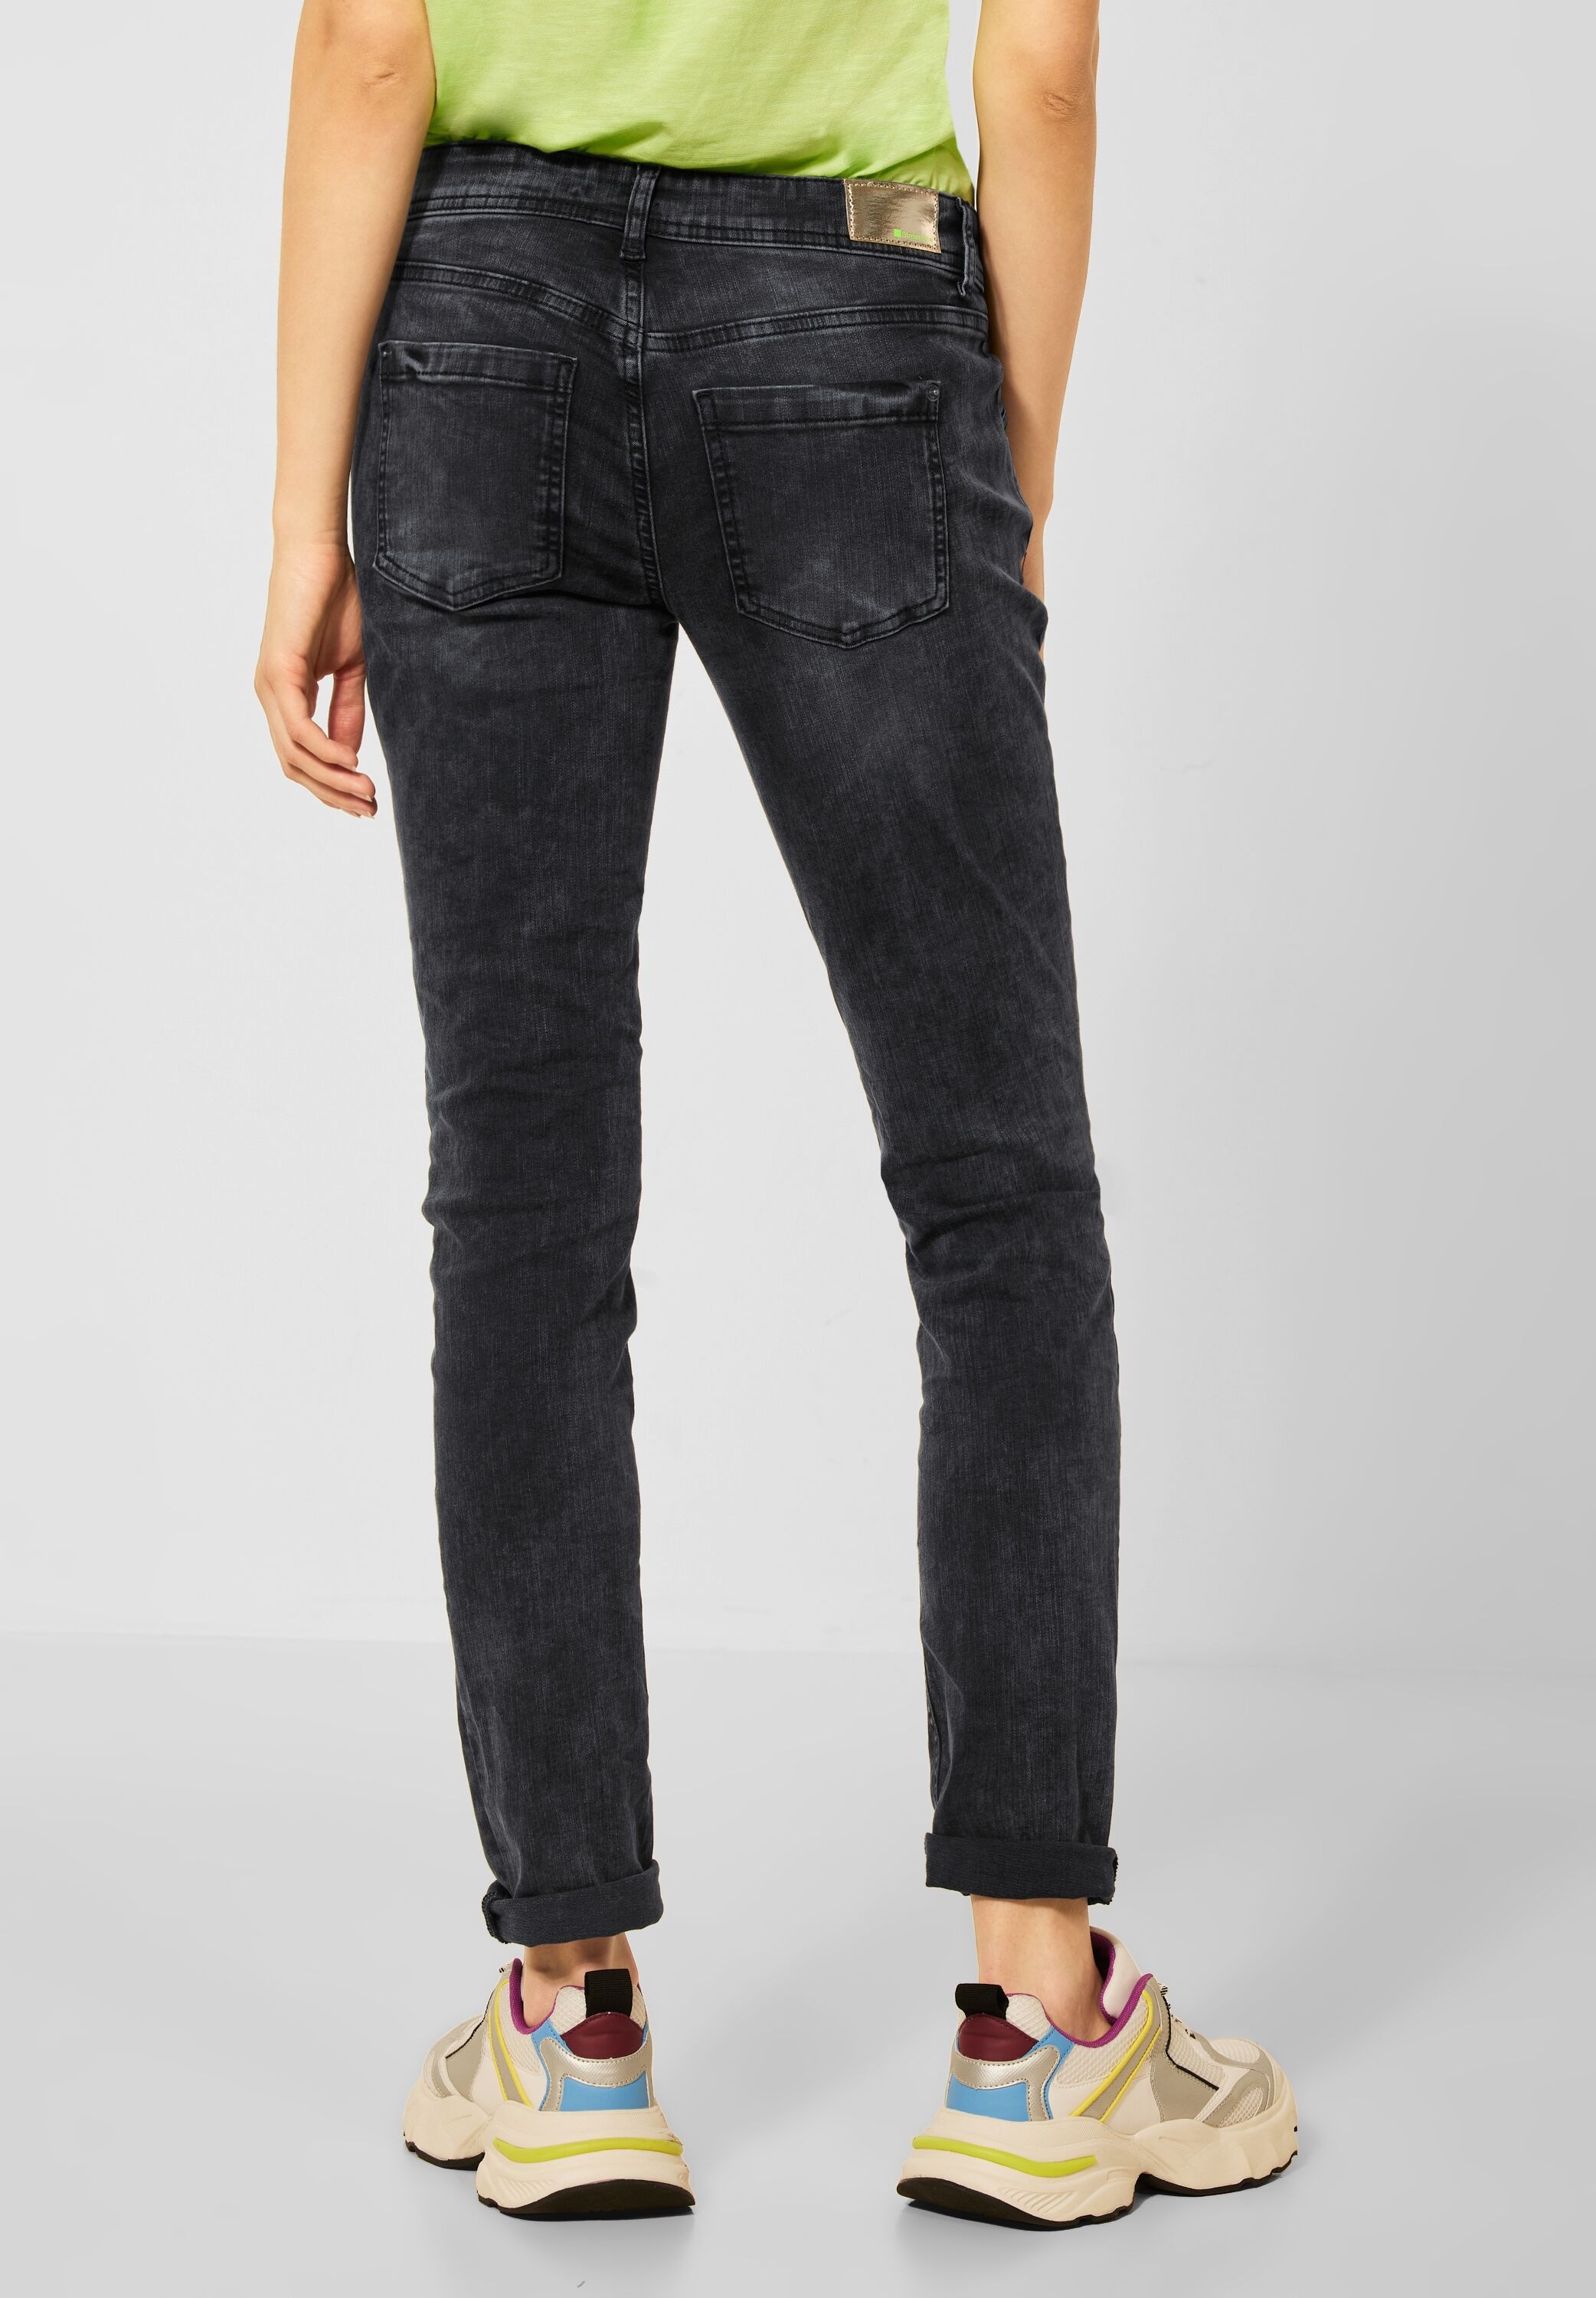 ONE online kaufen 5-Pocket-Style STREET Comfort-fit-Jeans,